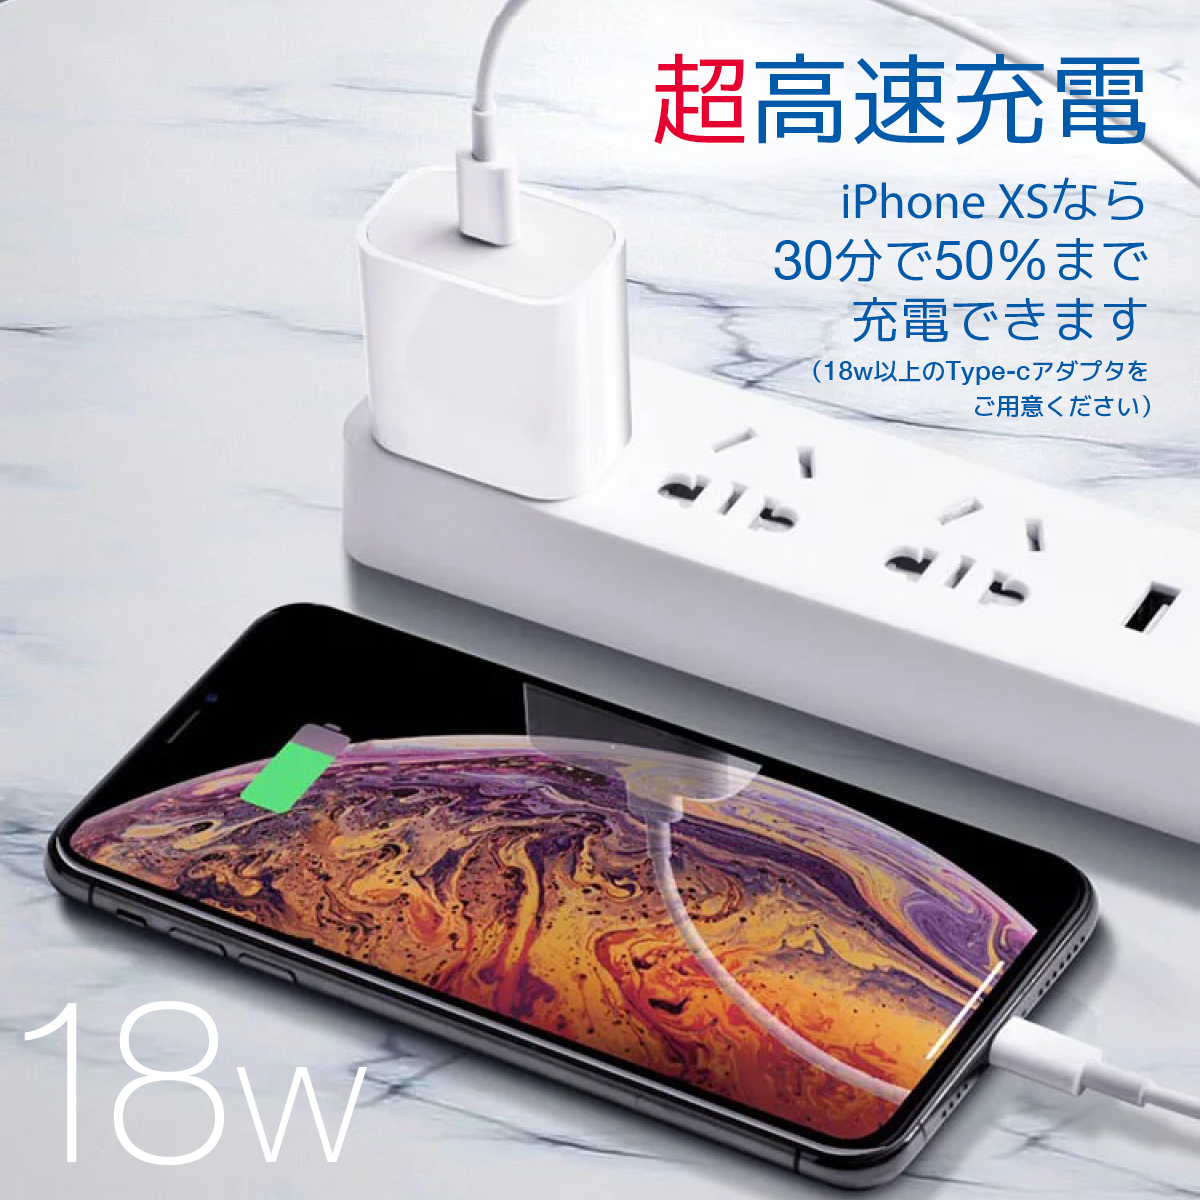 Lightning ケーブル 充電 iPhone ２m ライトニングケーブル USB 2m PD 急速充電 type-c タイプC データ転送 60日保証